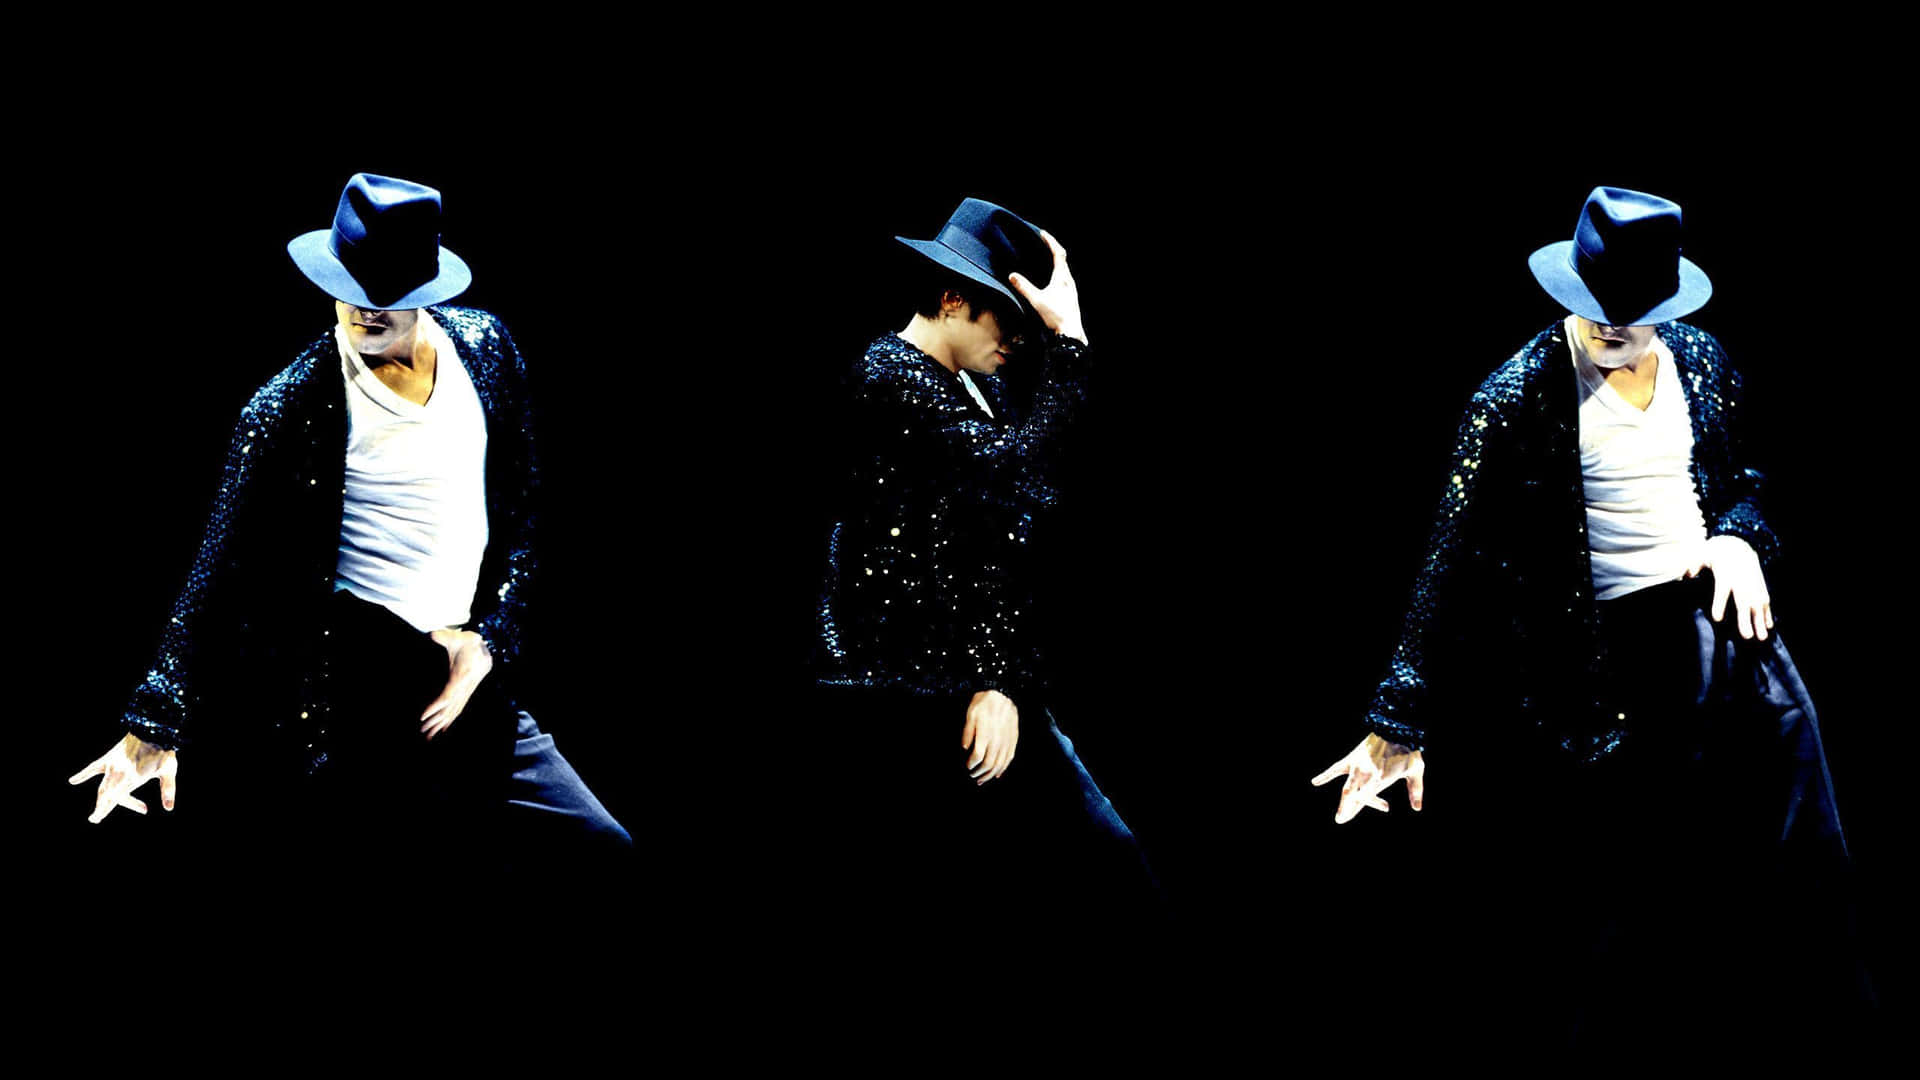 Michael Jackson Performing on Stage